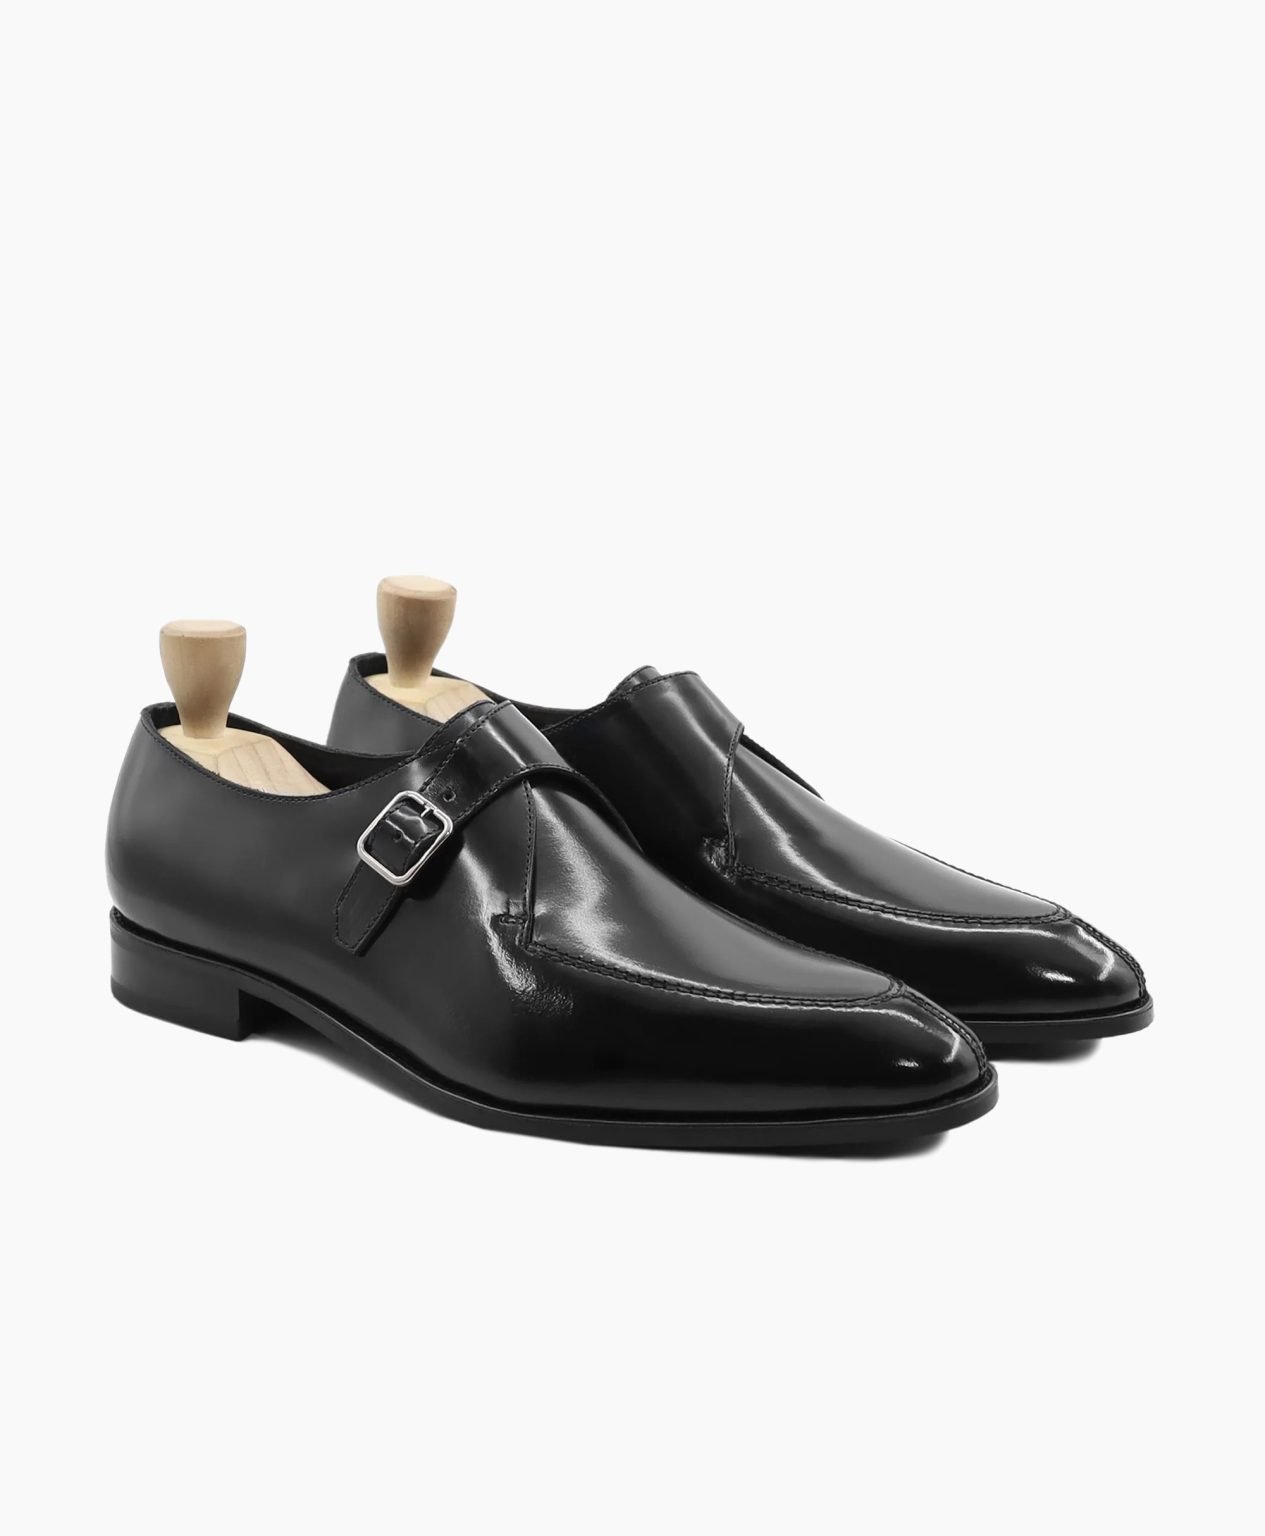 ashburton-single-monkstrap-black-leather-shoes-image200